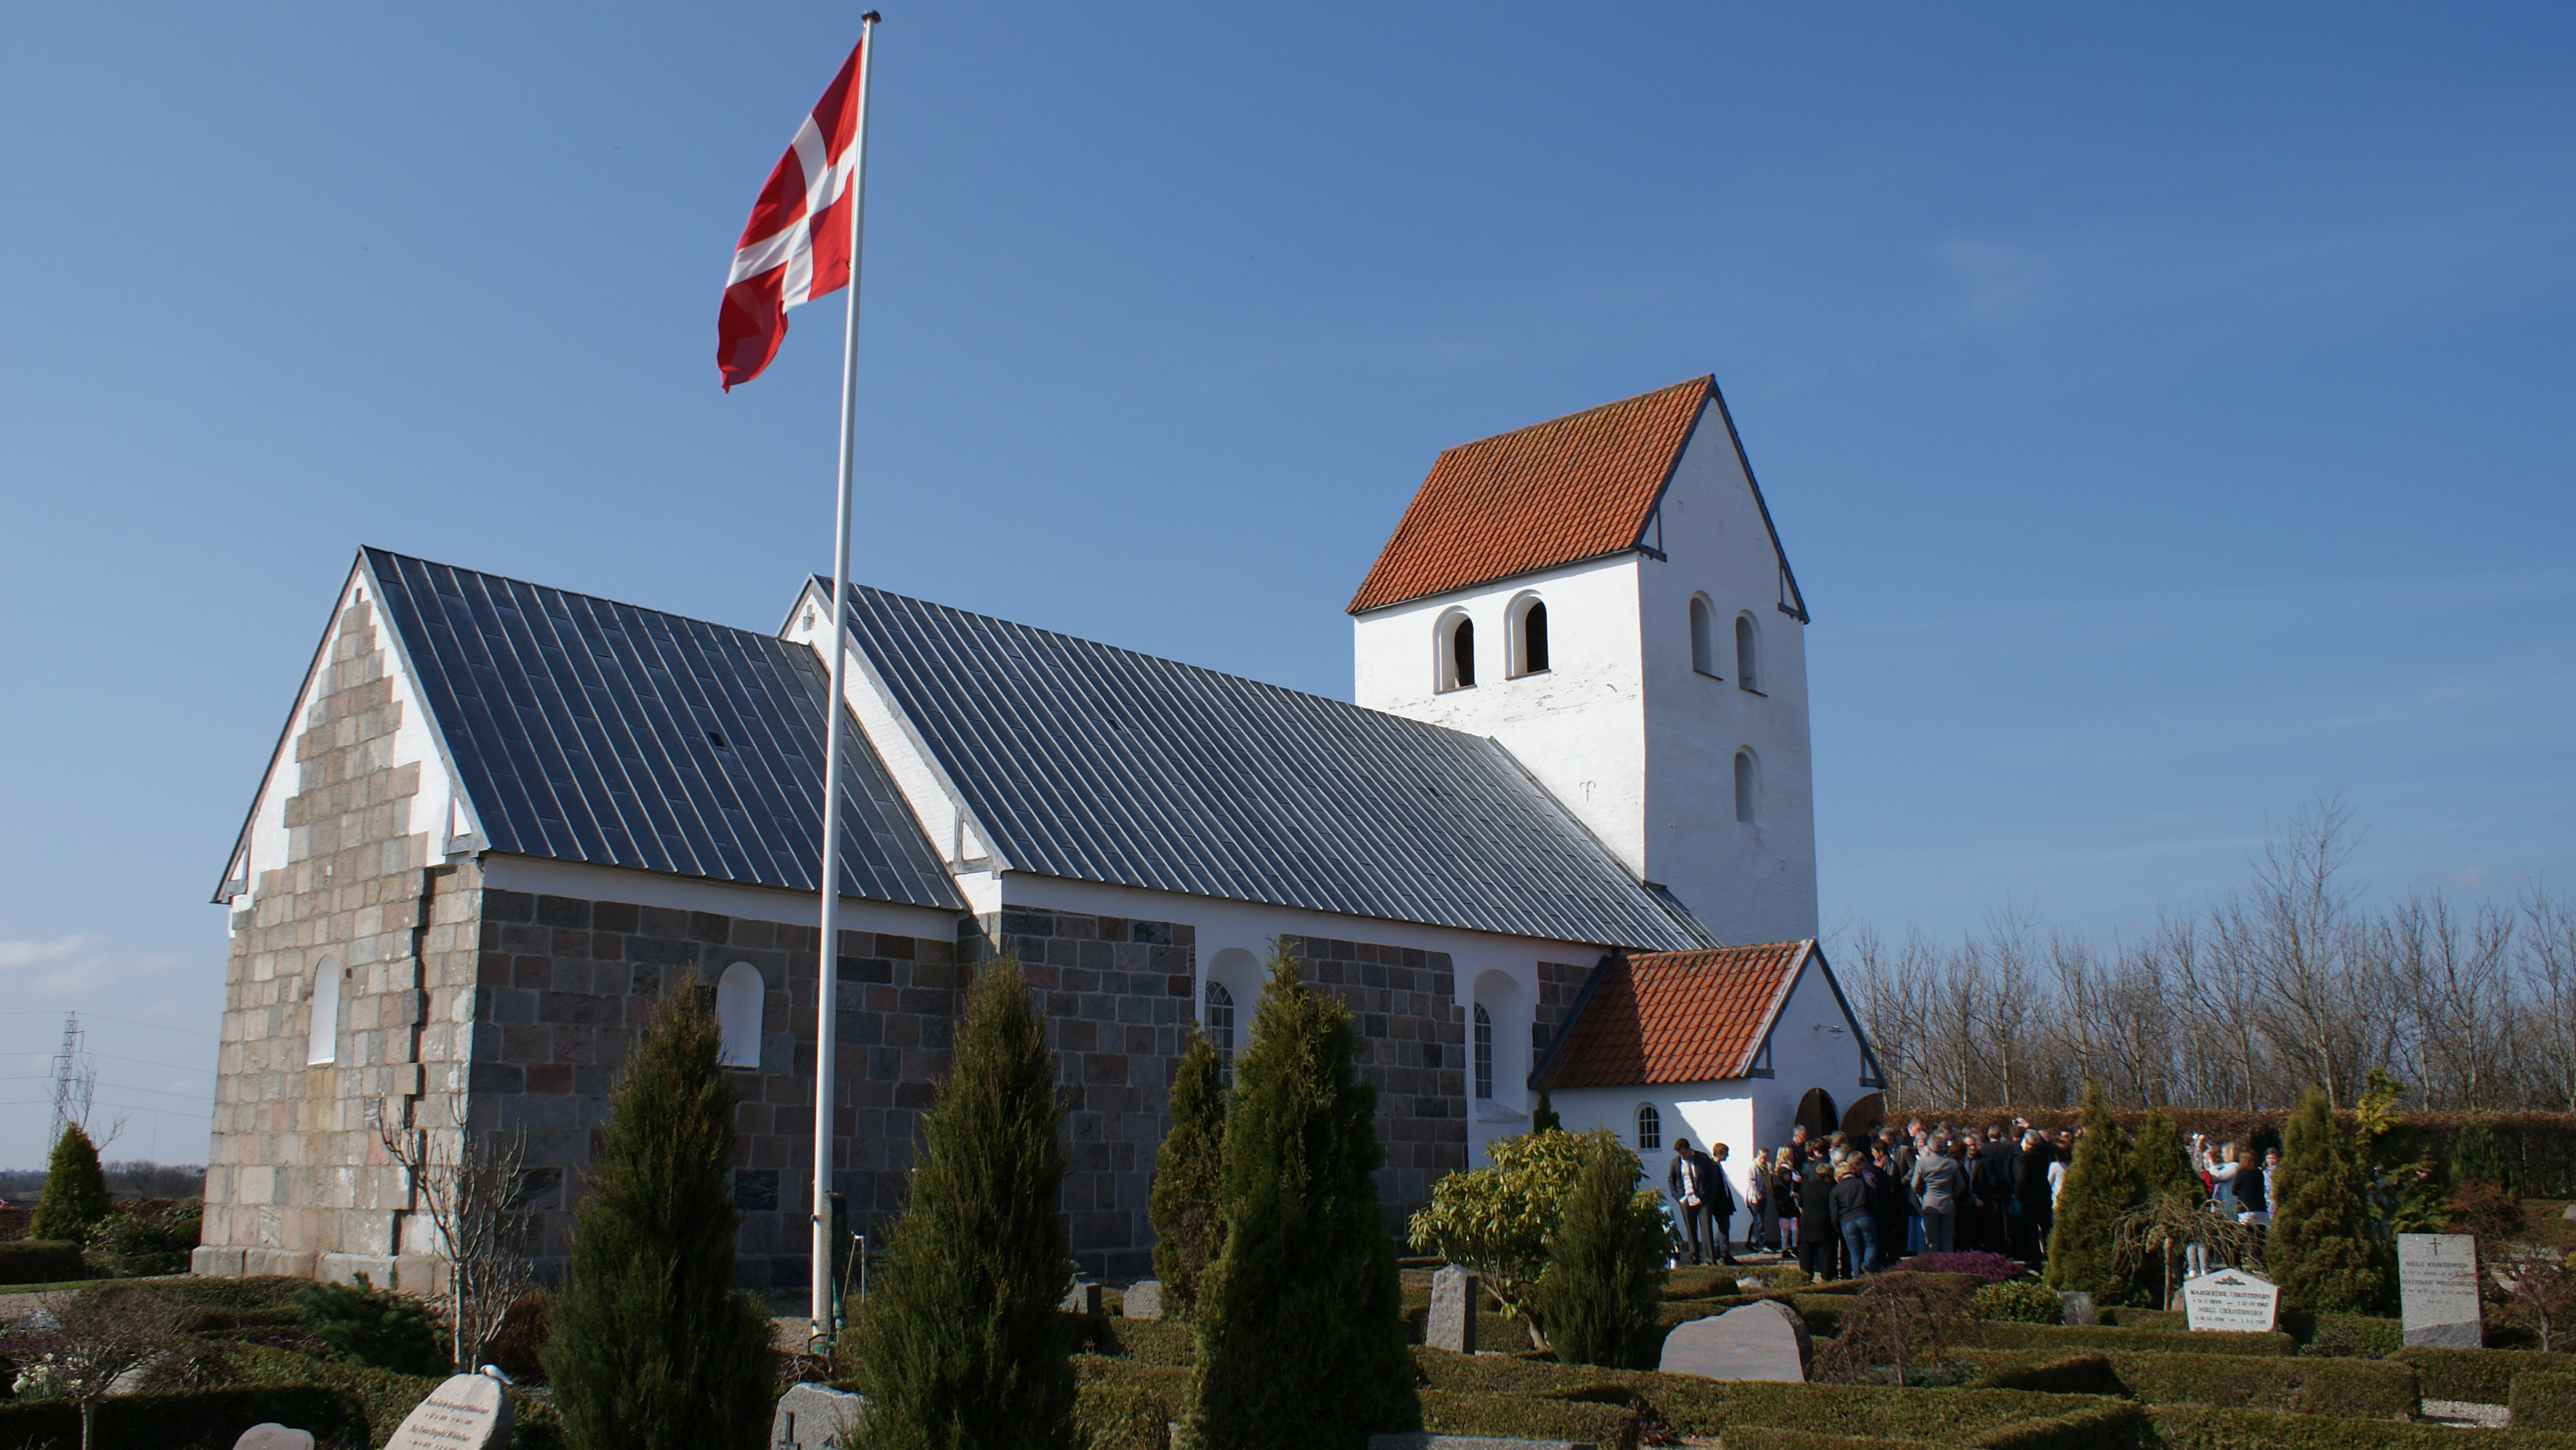 Handbjerg Kirke